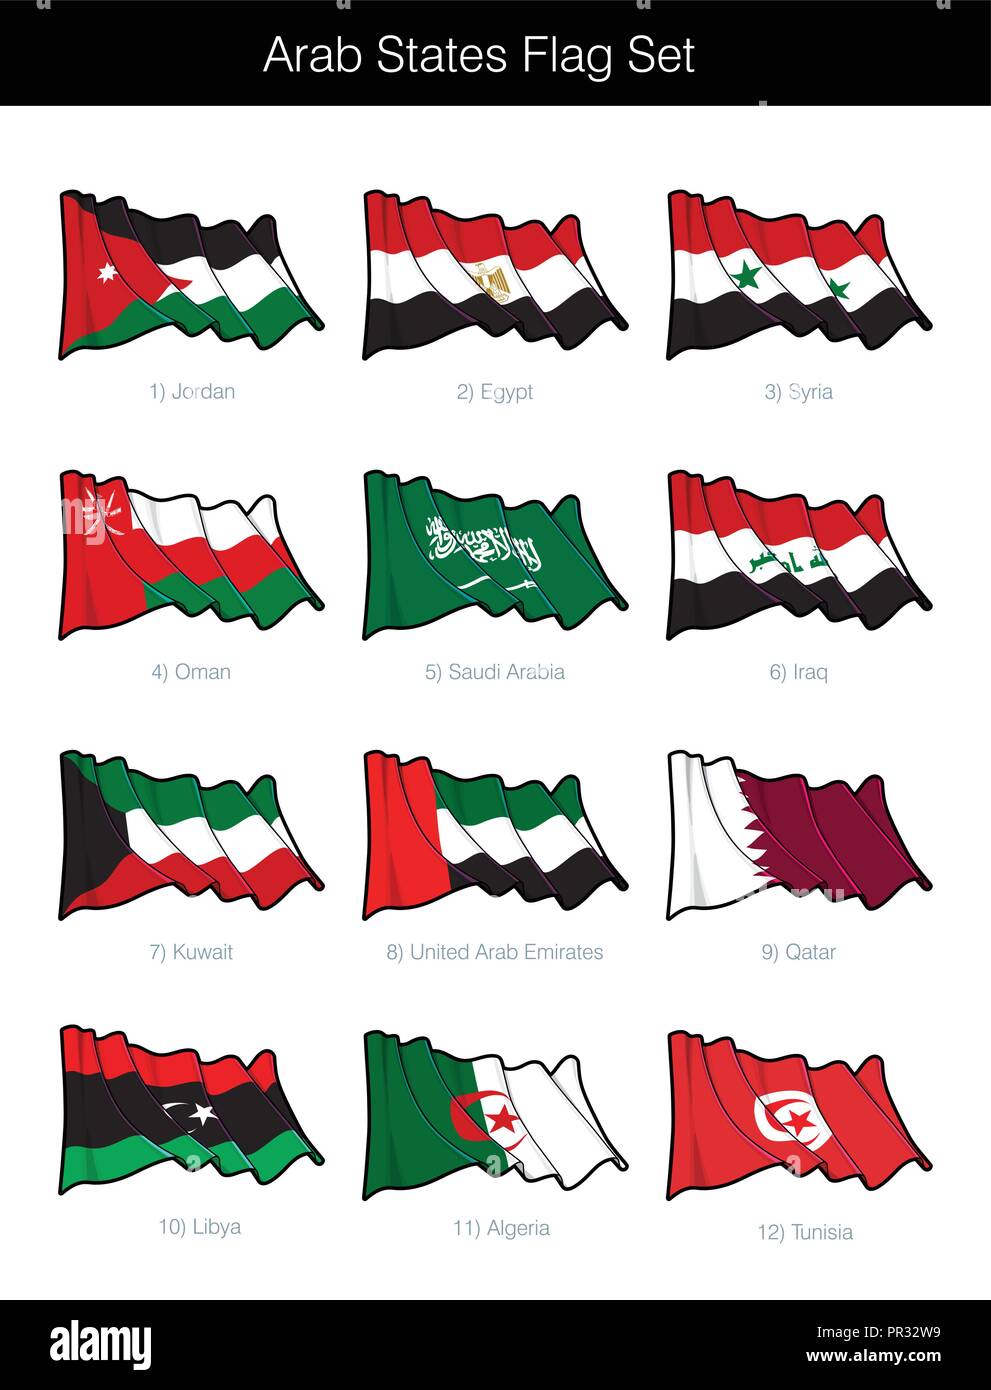 Arab States Waving Flag Set. The set includes the flags of Jordan, Egypt, Syria, Oman, Saudi Arabia, Iraq, Kuwait, UAE, Qatar, Libya, Algeria and Tuni Stock Vector